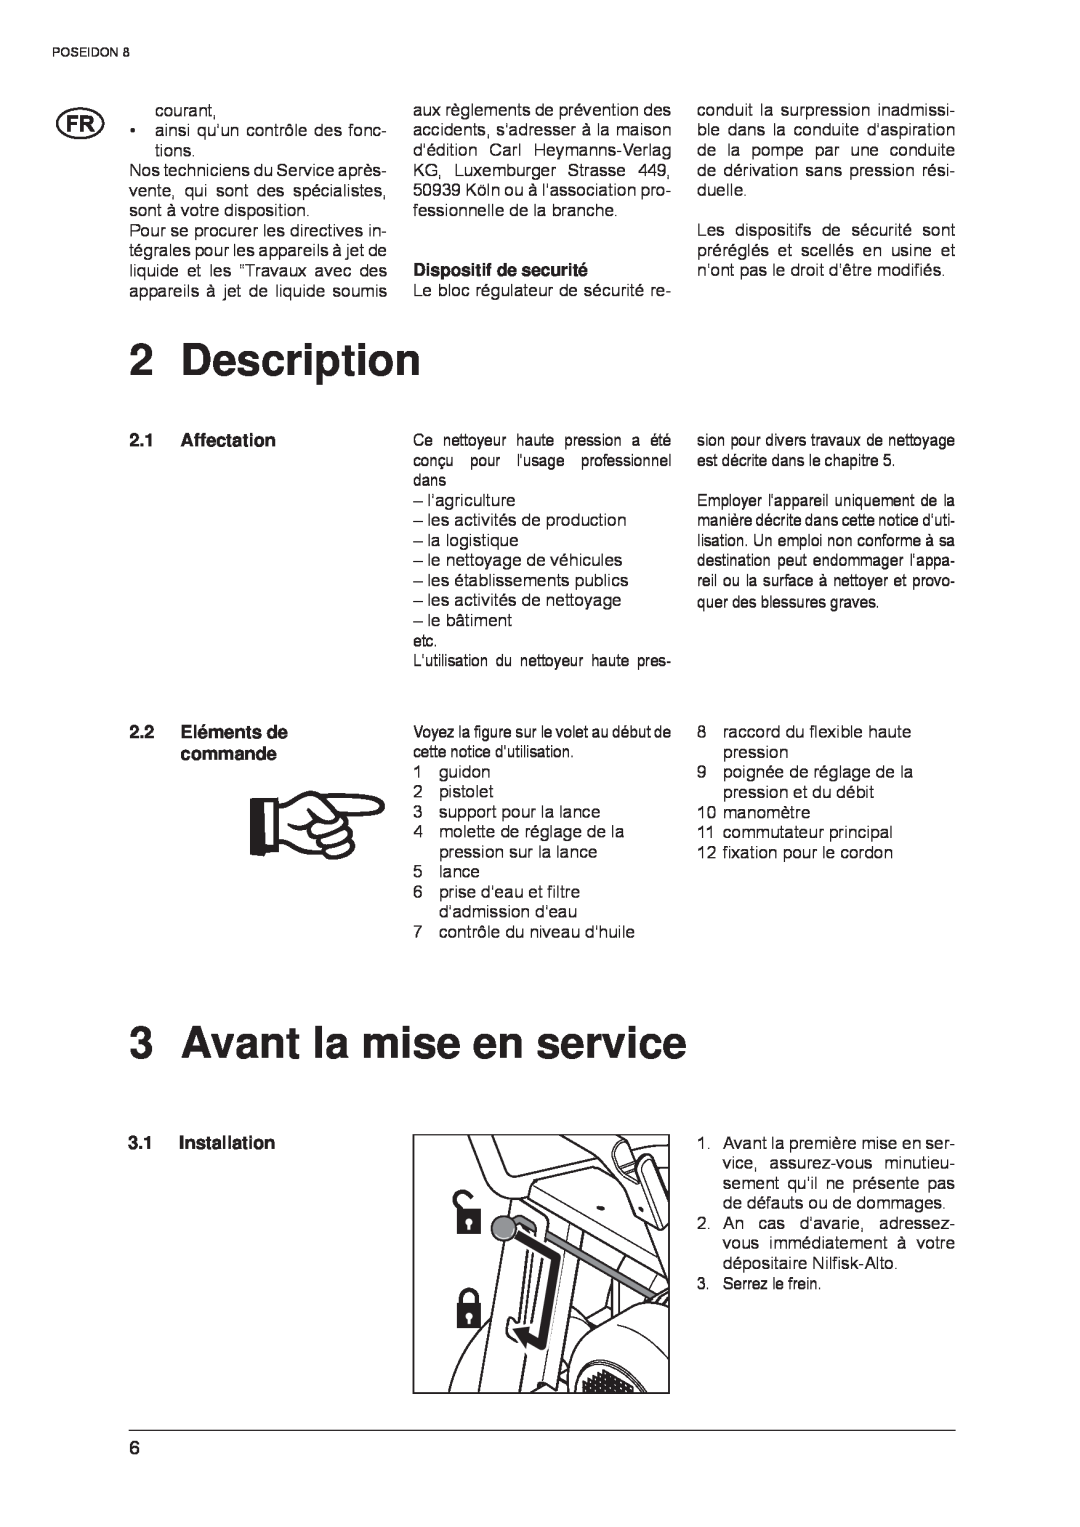 Nilfisk-ALTO POSEIDON 8 manual Description, Avant la mise en service, Dispositif de securité, Affectation, 3.1Installation 